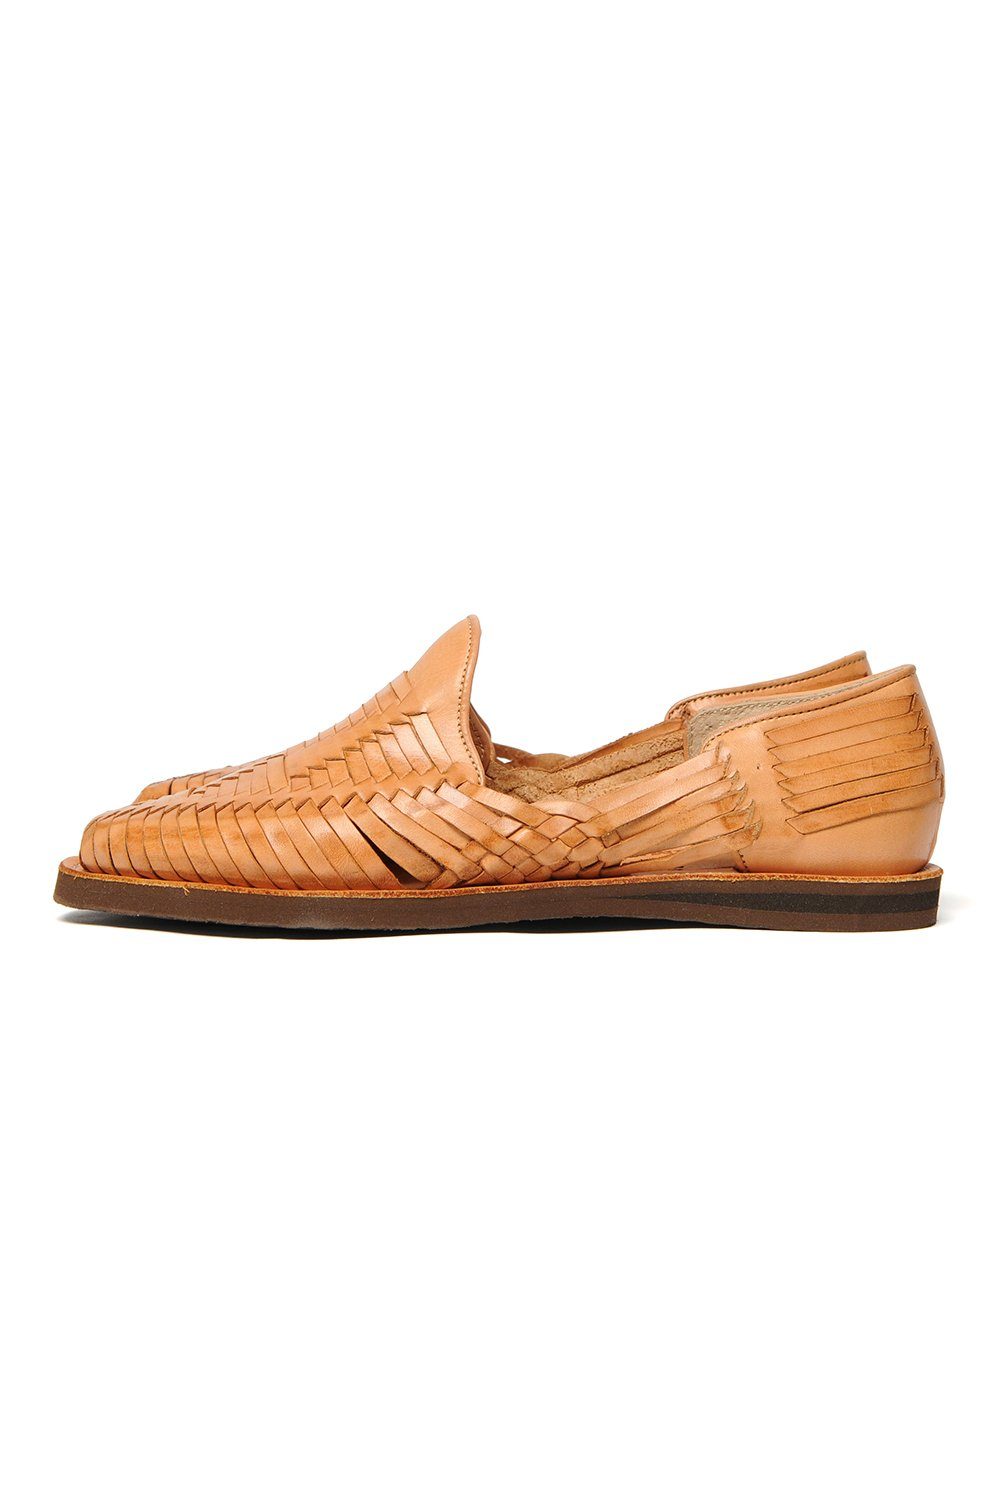 CHAMULA - Cancun Leather Huarache | Slip on Vegetable Tanned Sandals | Tan 1 - HANSEN Garments